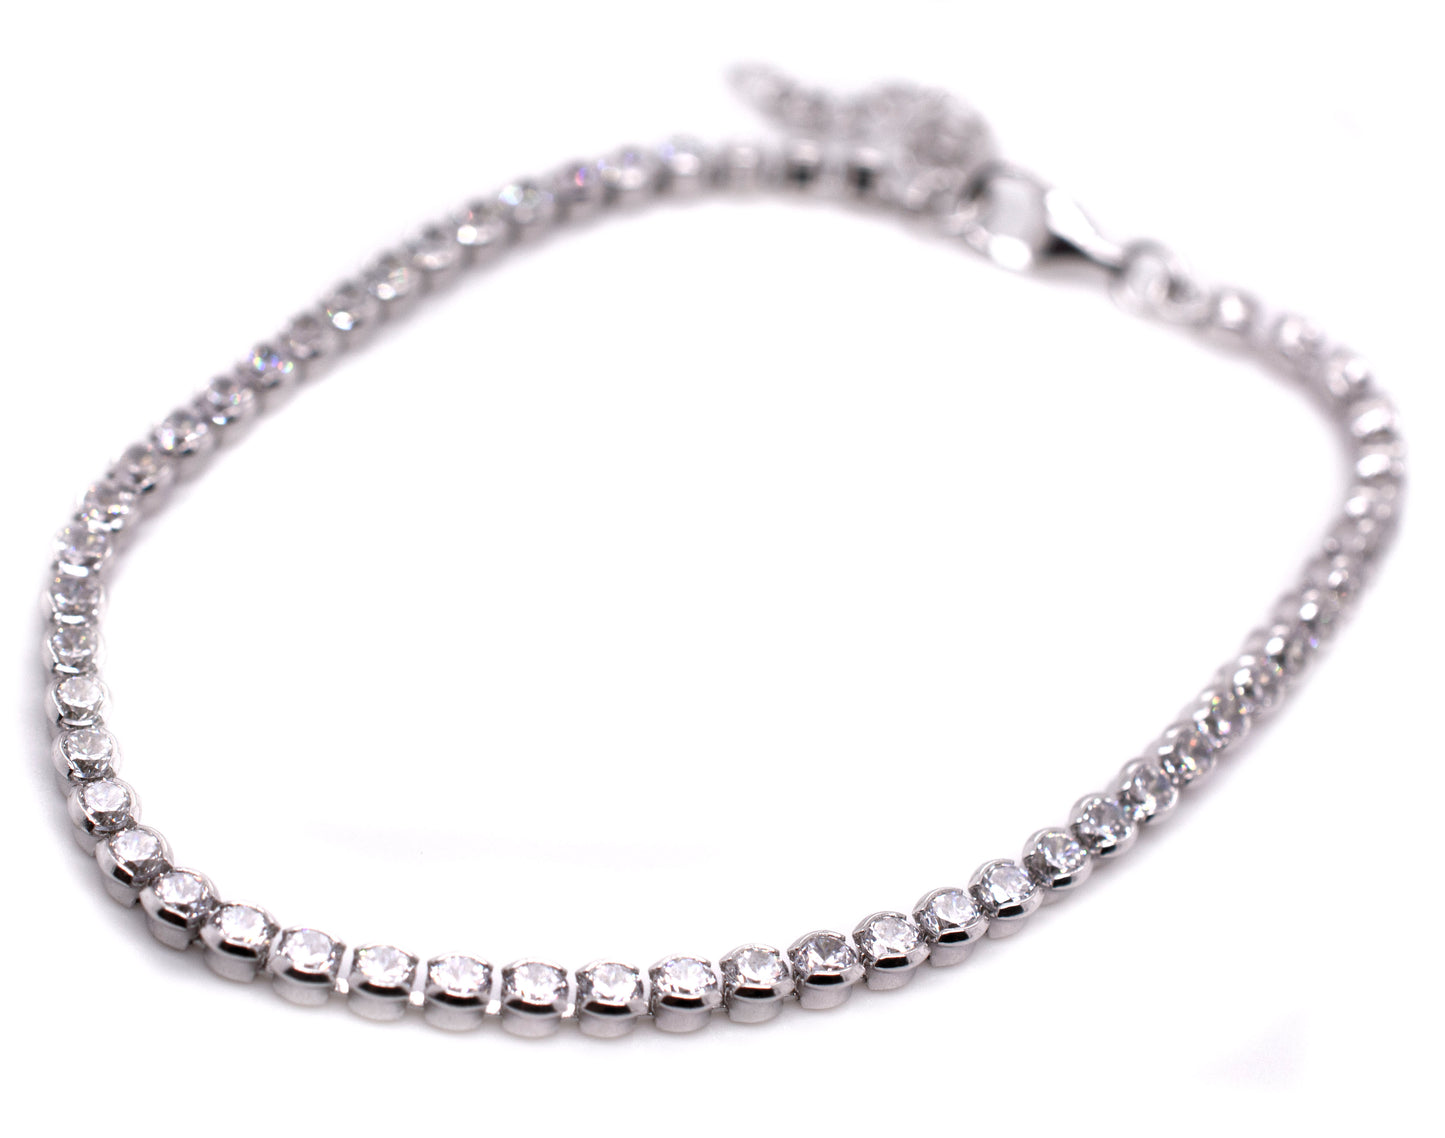 An elegant Super Silver Round Cubic Zirconia Tennis Bracelet, featuring a dainty cubic zirconia tennis design.